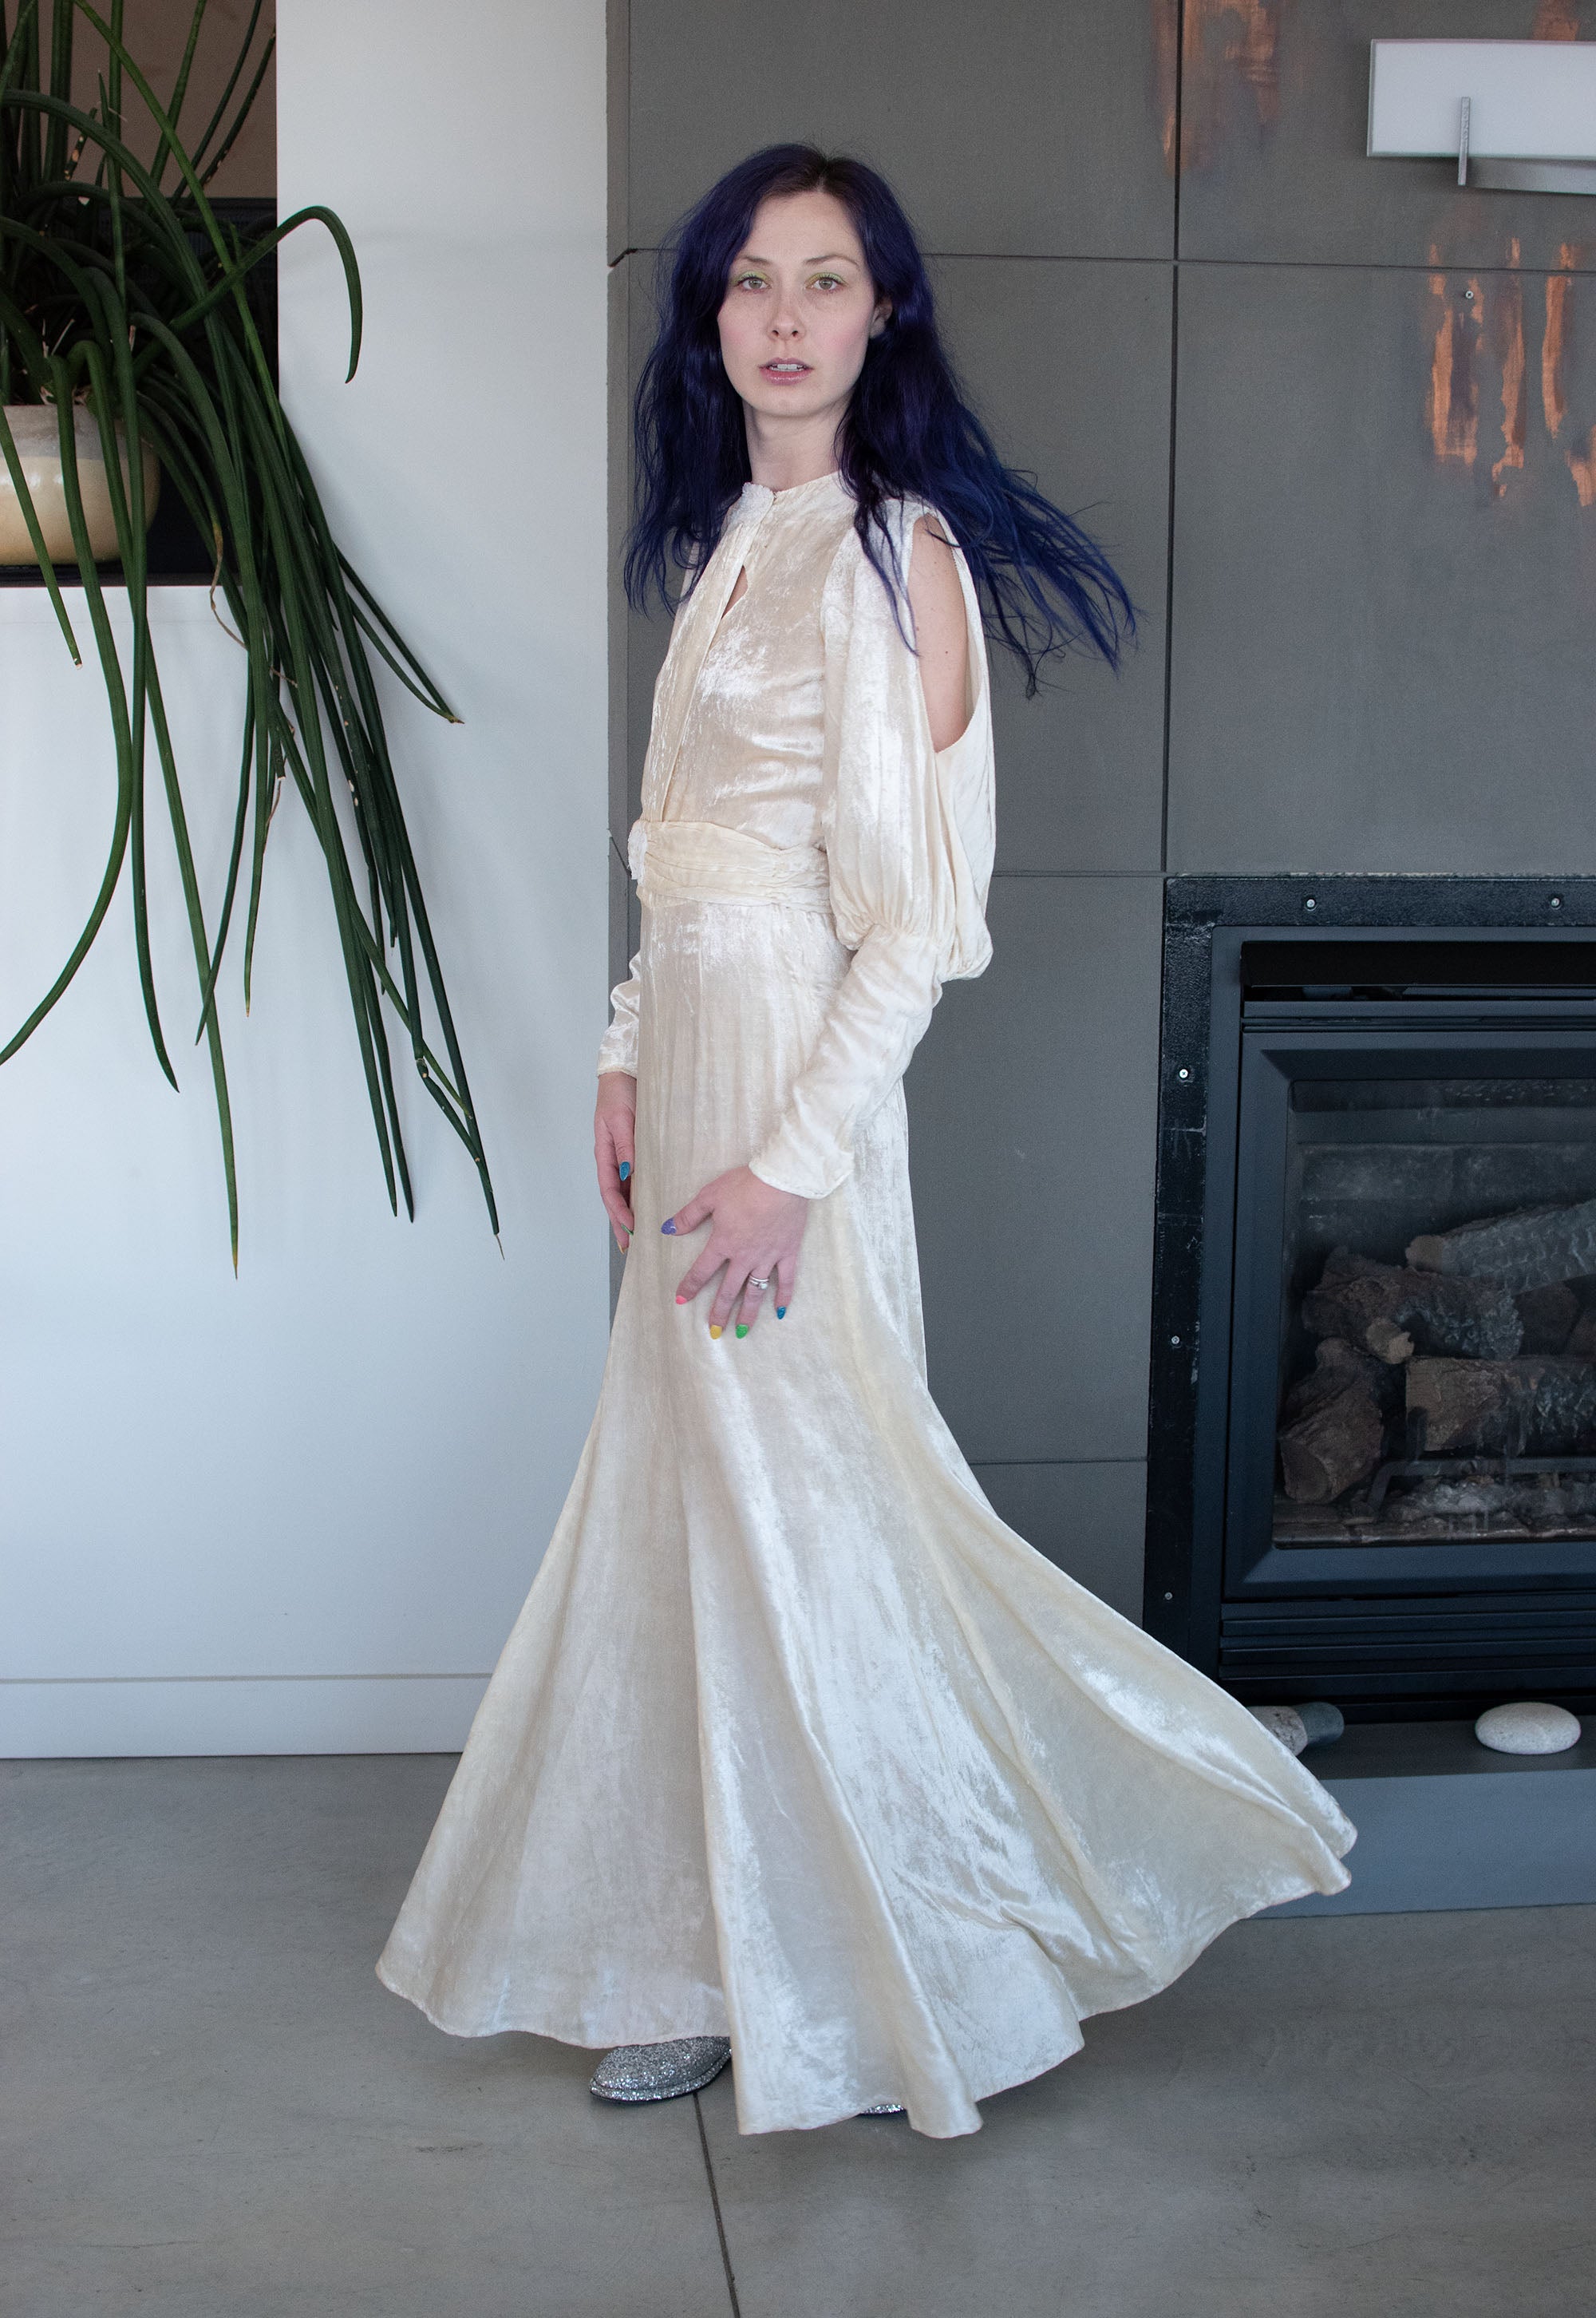 Winter Wedding Fashion Ideas - Winter wedding dresses & outfits